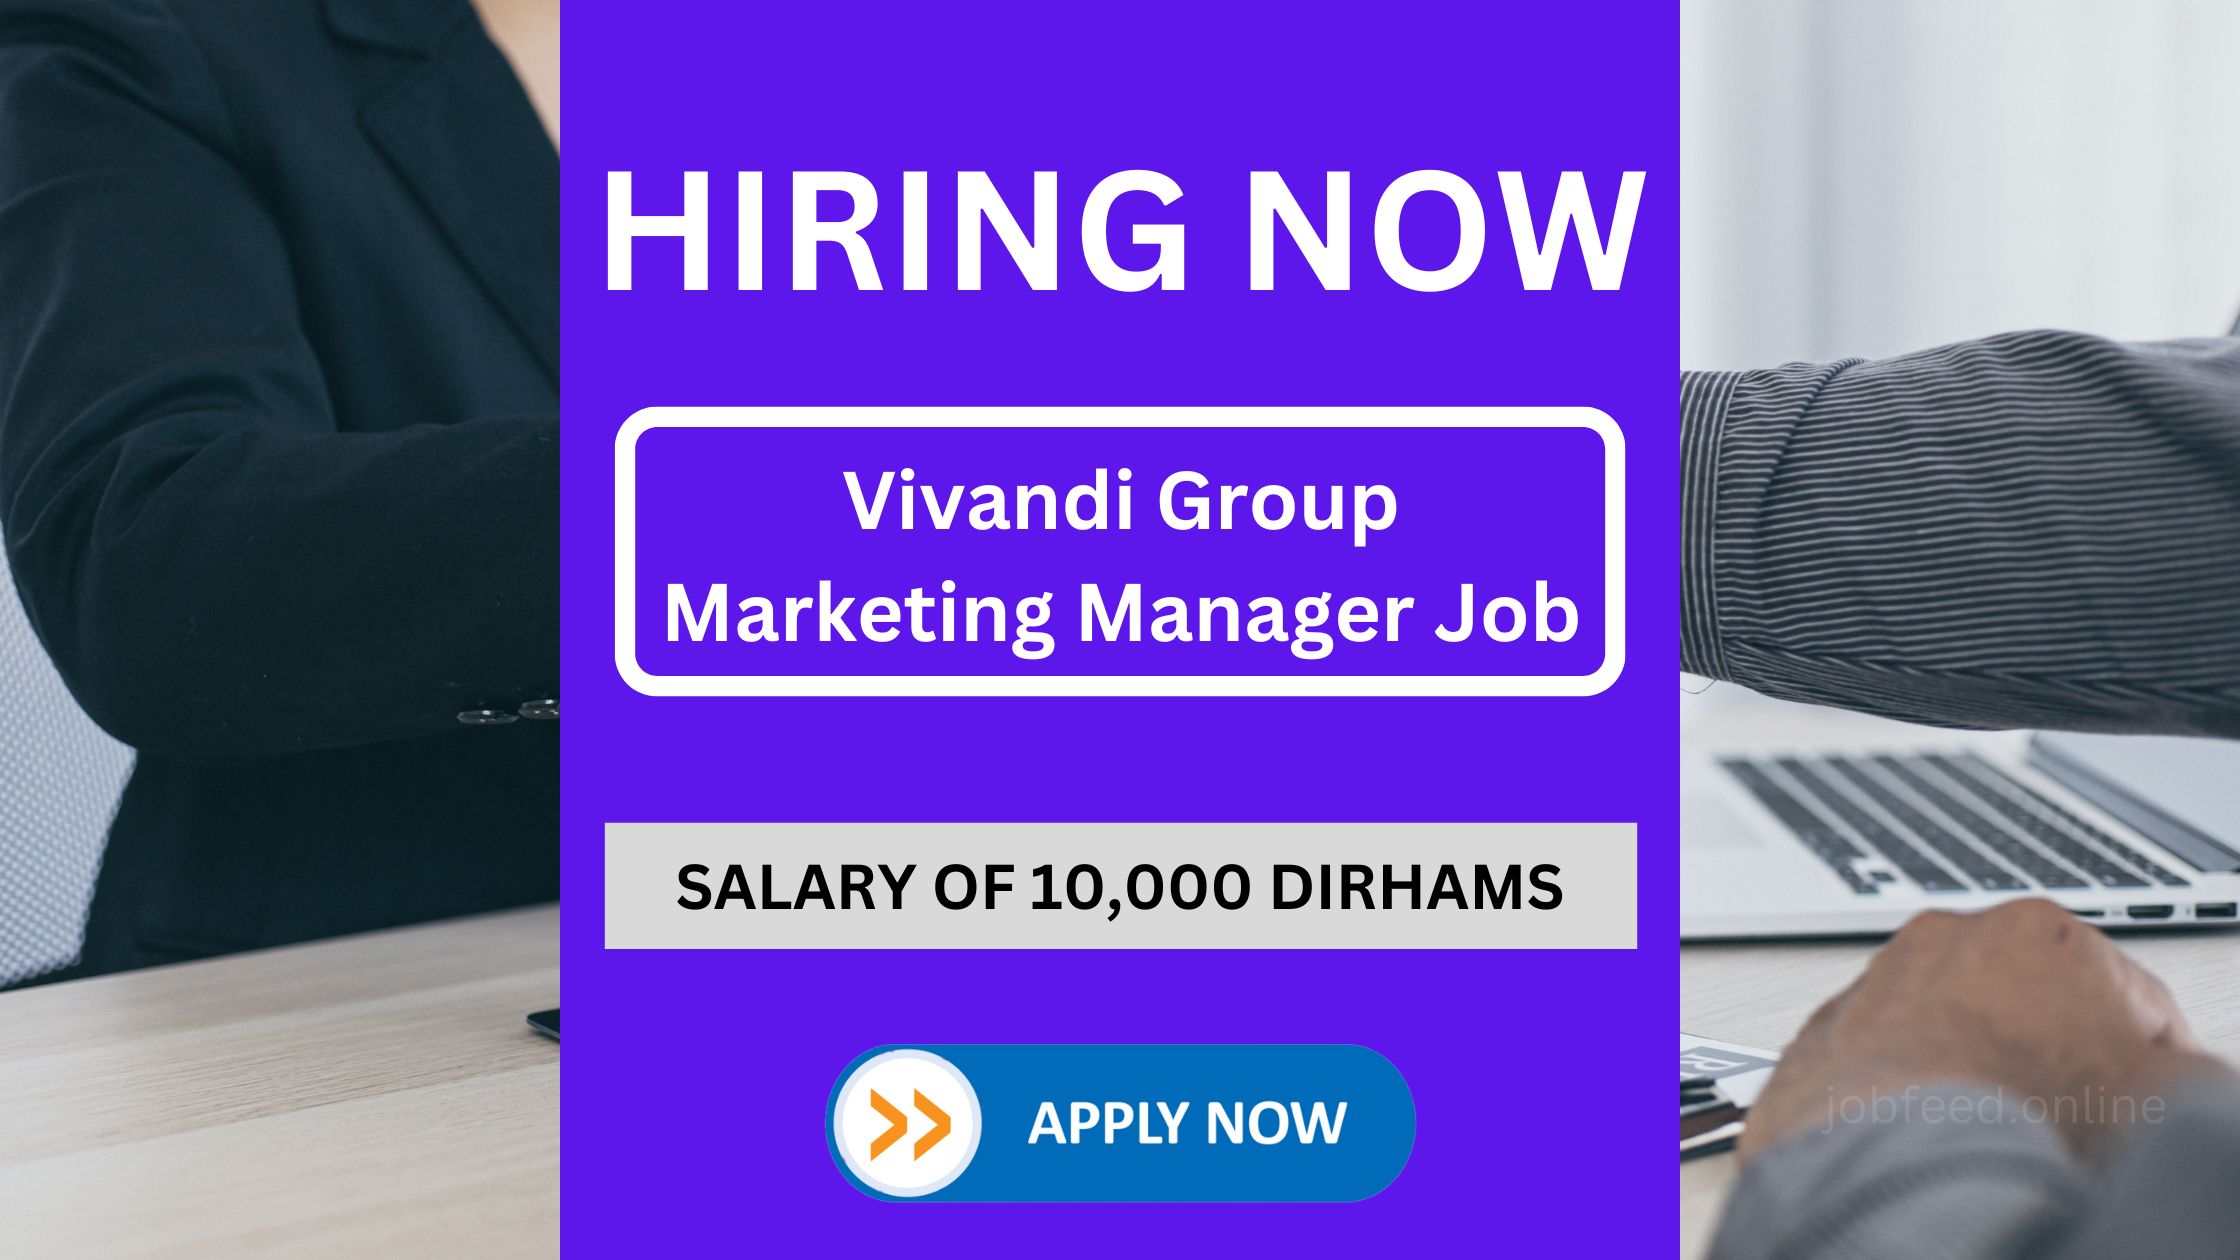 Vivandi Group Announces Marketing Manager Job Vacancy with Salary of 10,000 Dirhams